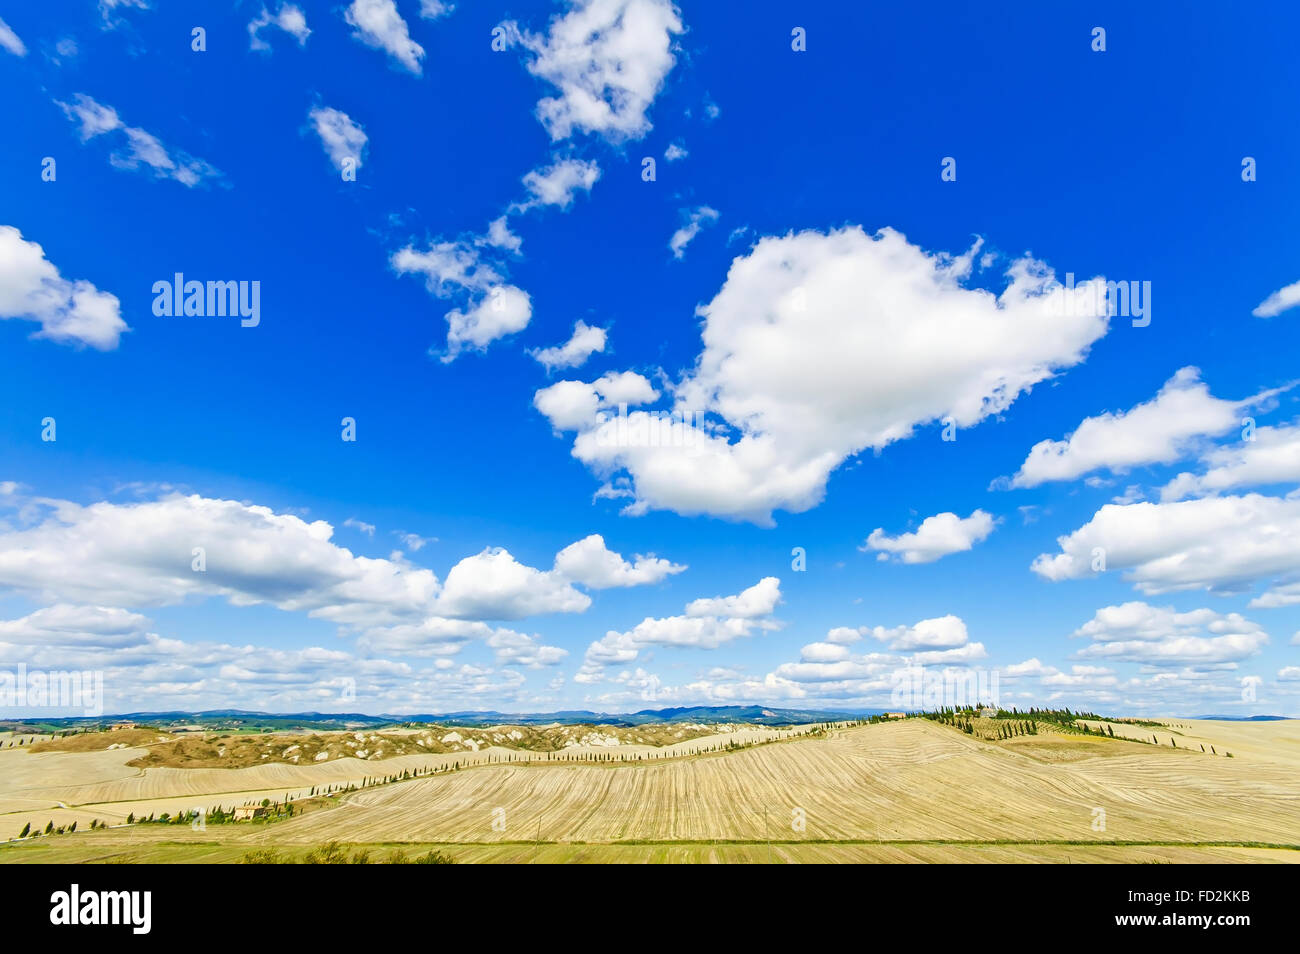 Toskana Landschaft Panorama Blick über Felder und Bäume in Crete Senesi landen in der Nähe von Siena, Toskana, Italien, Europa. Stockfoto